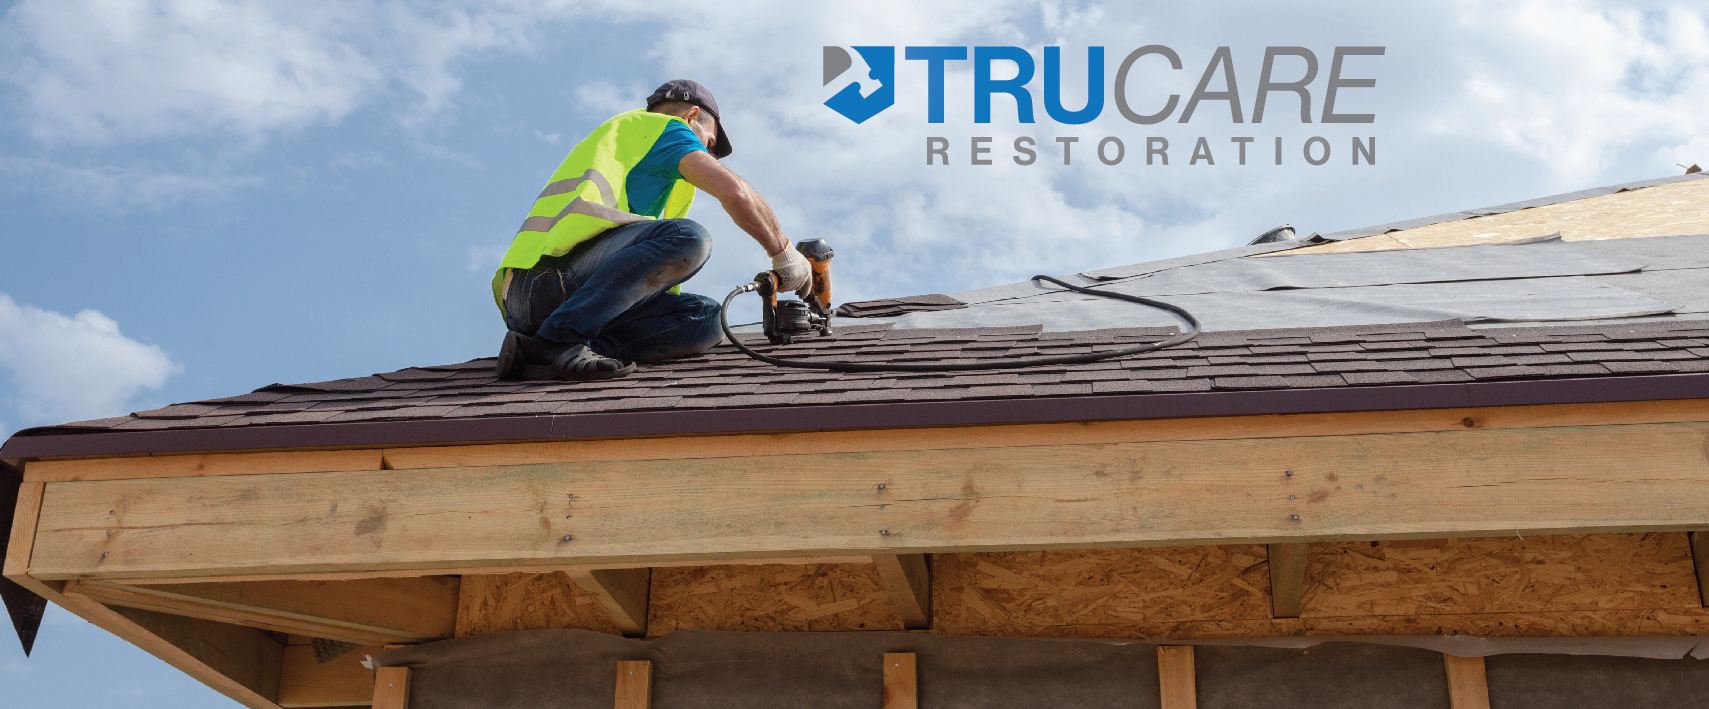 TruCare Restoration & Roofing